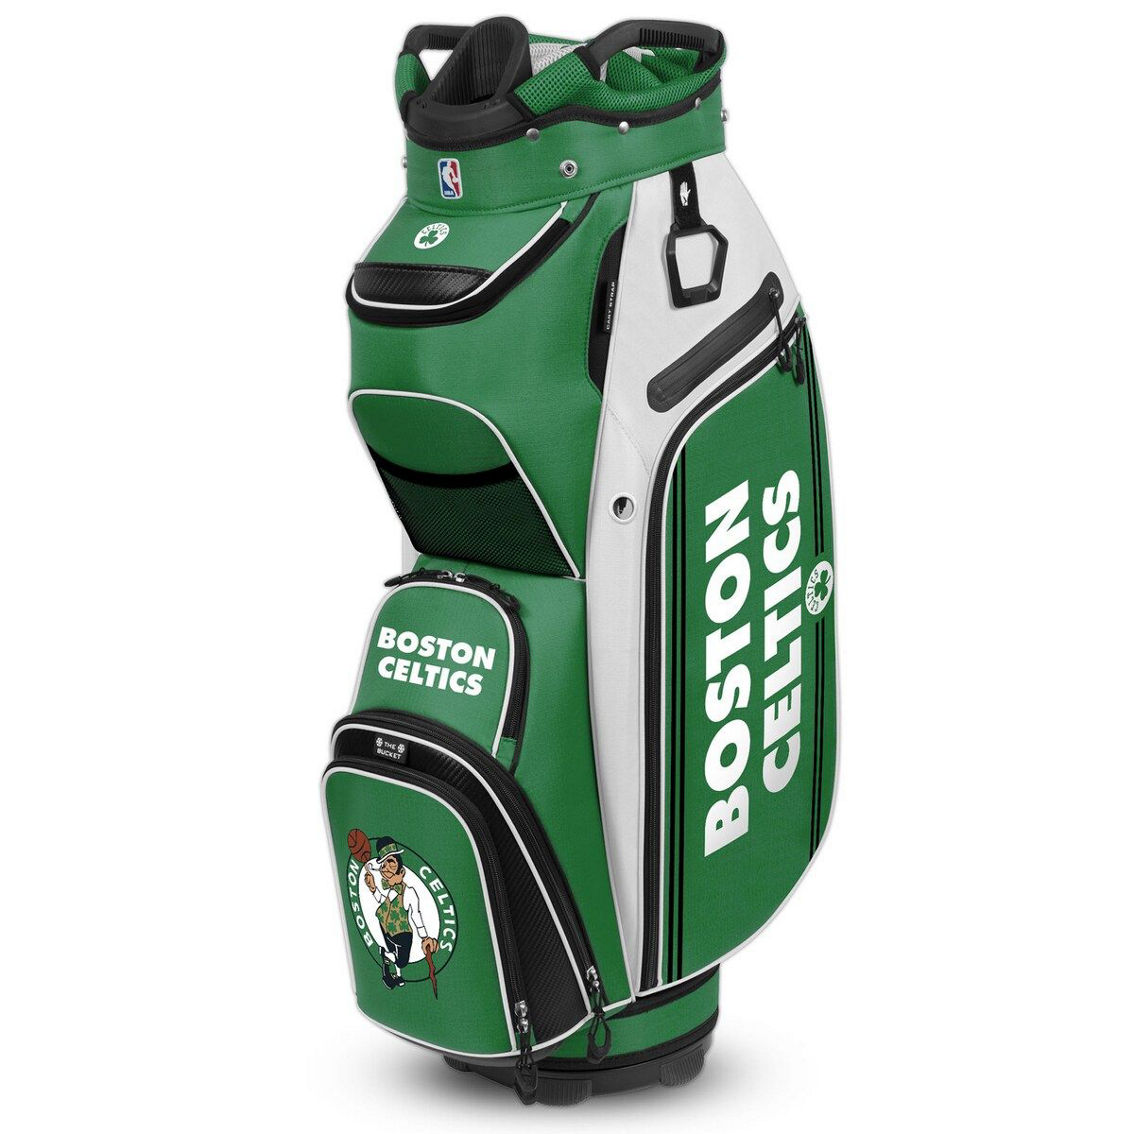 WinCraft Boston Celtics Bucket III Cooler Cart Golf Bag - Image 2 of 3